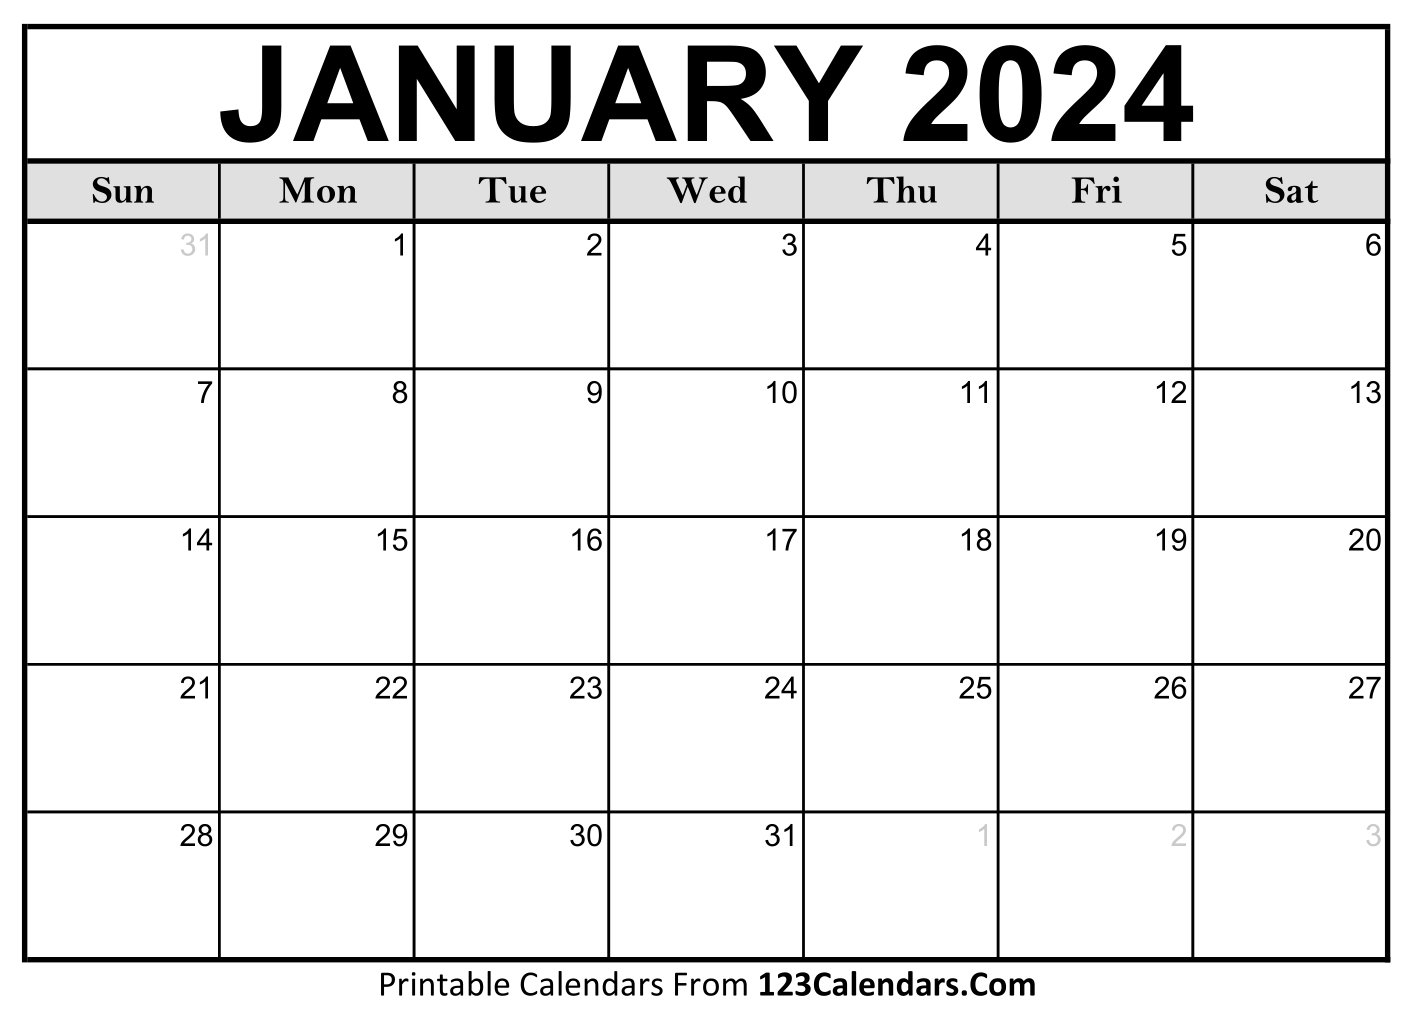 Printable January 2024 Calendar Templates - 123Calendars for Blank January 2024 Calendar Printable